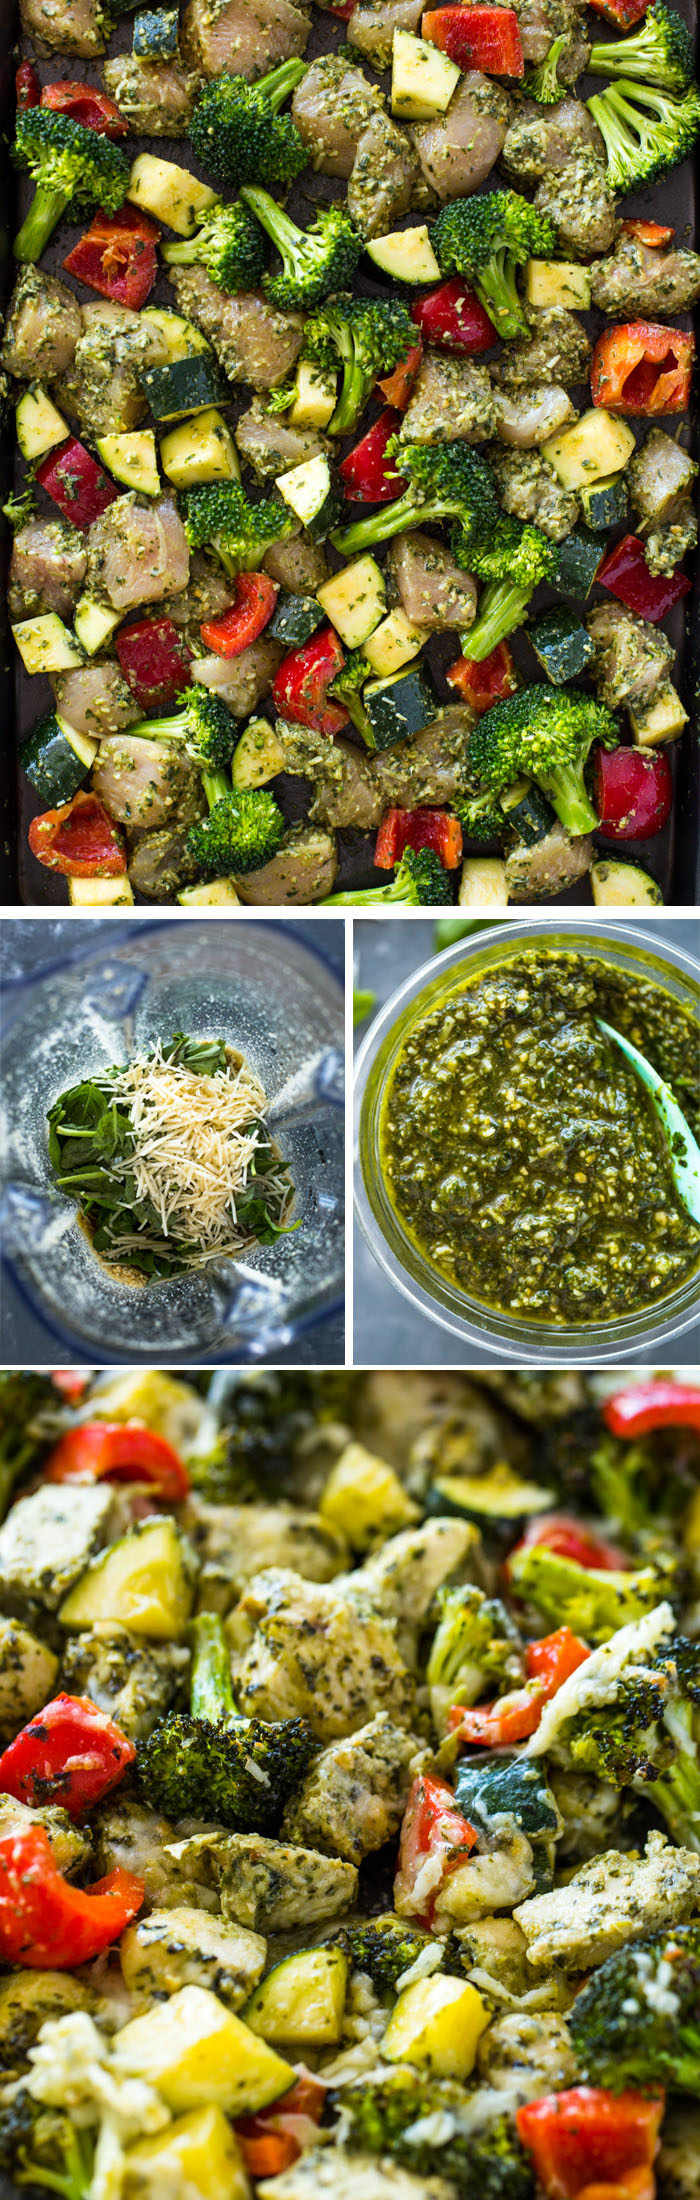 Healthy Pesto Chicken and Veggies (20 Minute Sheet Pan)